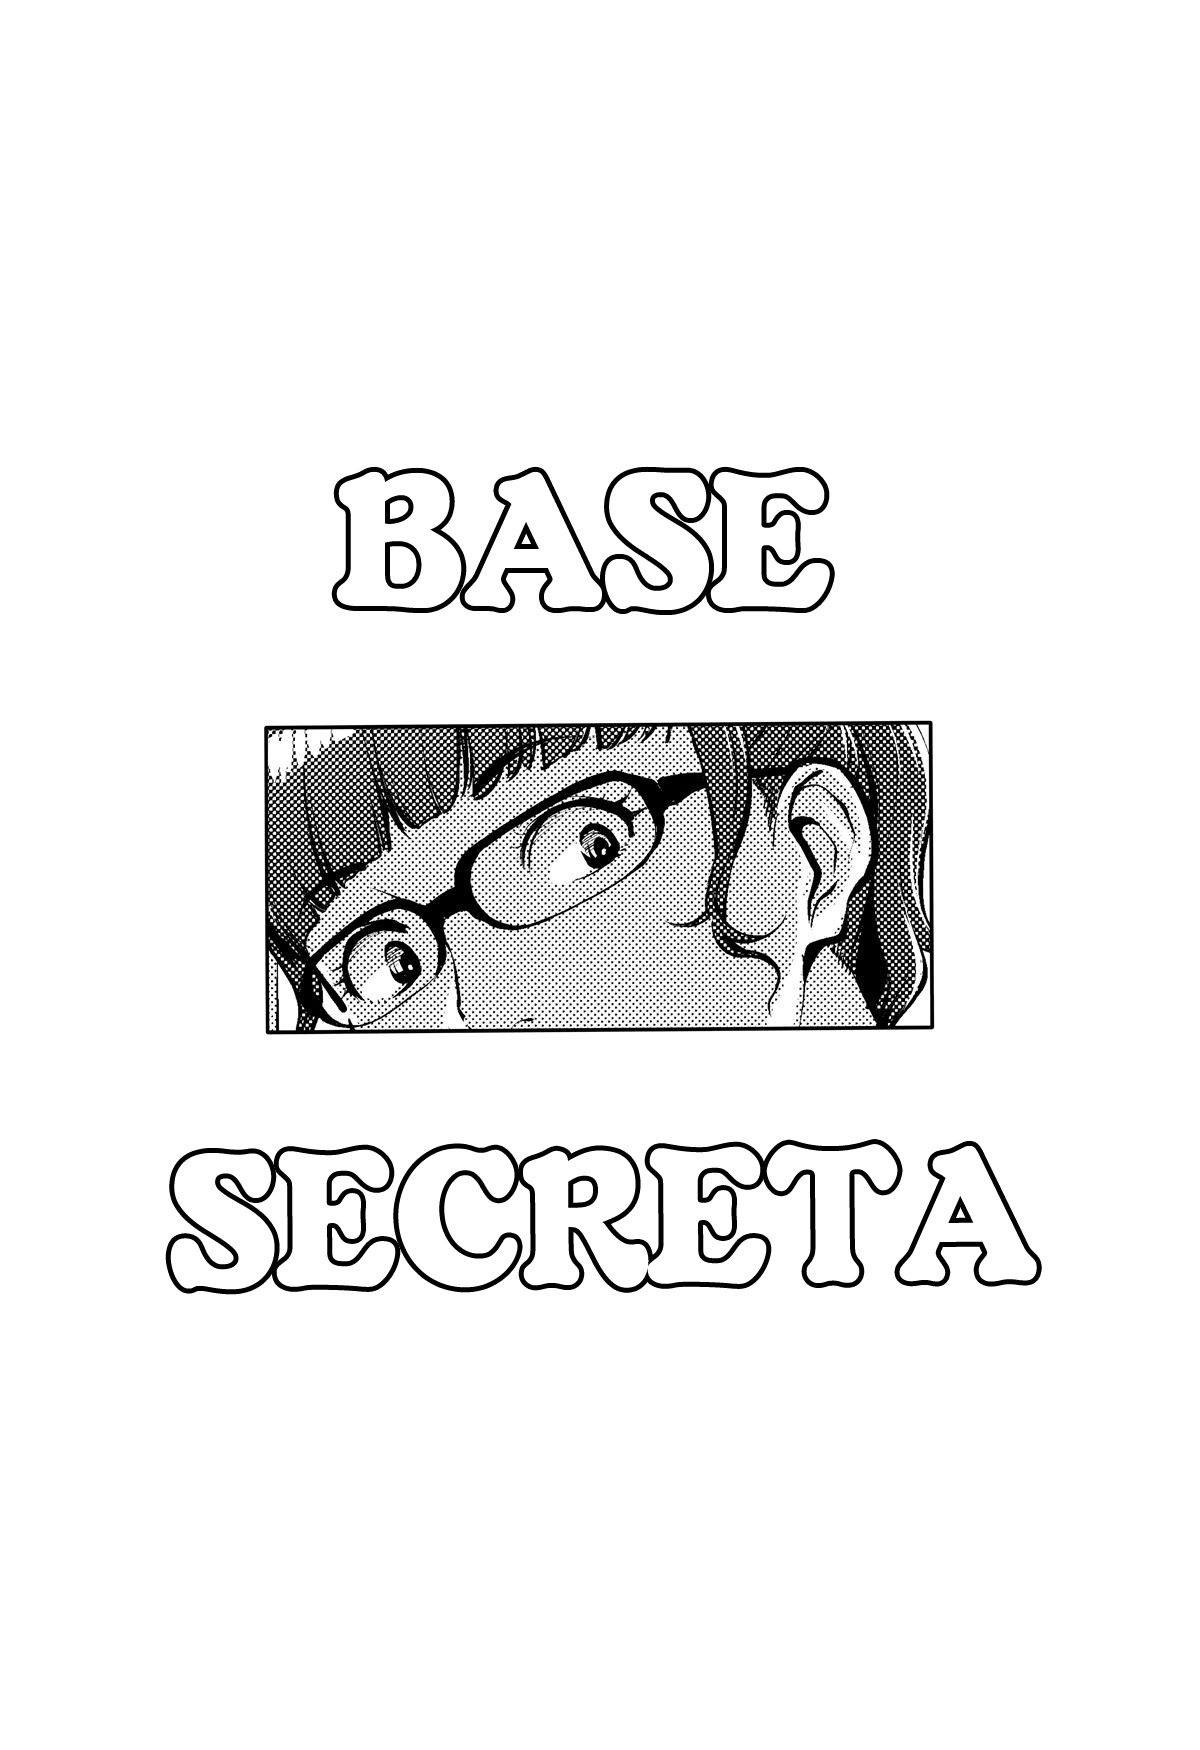 Base Secreta